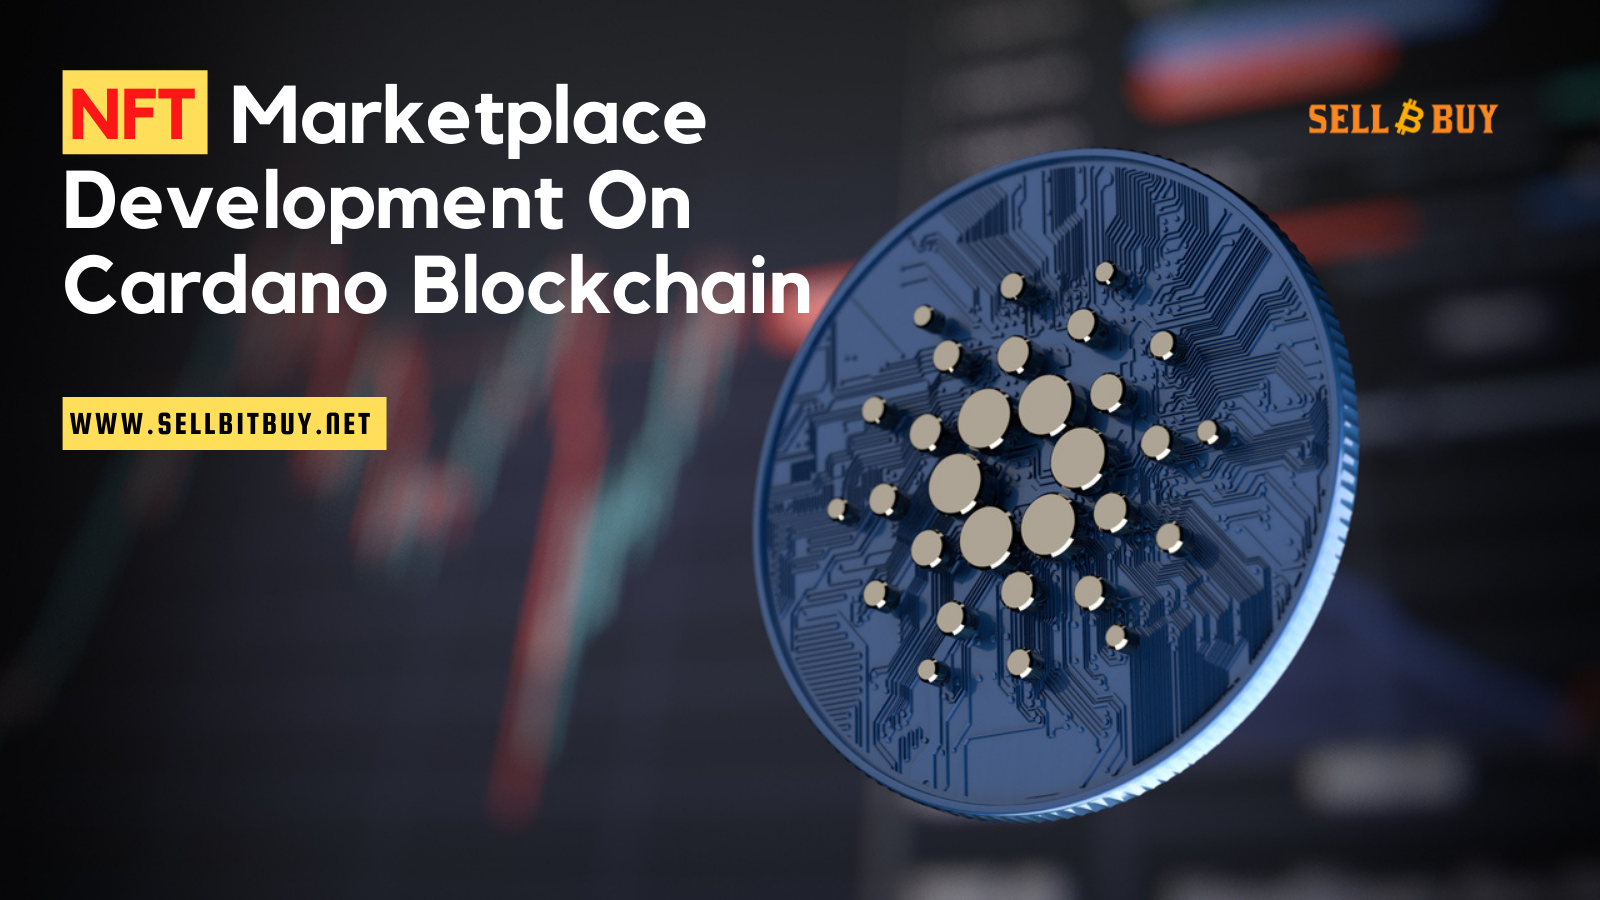 NFT Marketplace Development On Cardano Blockchain